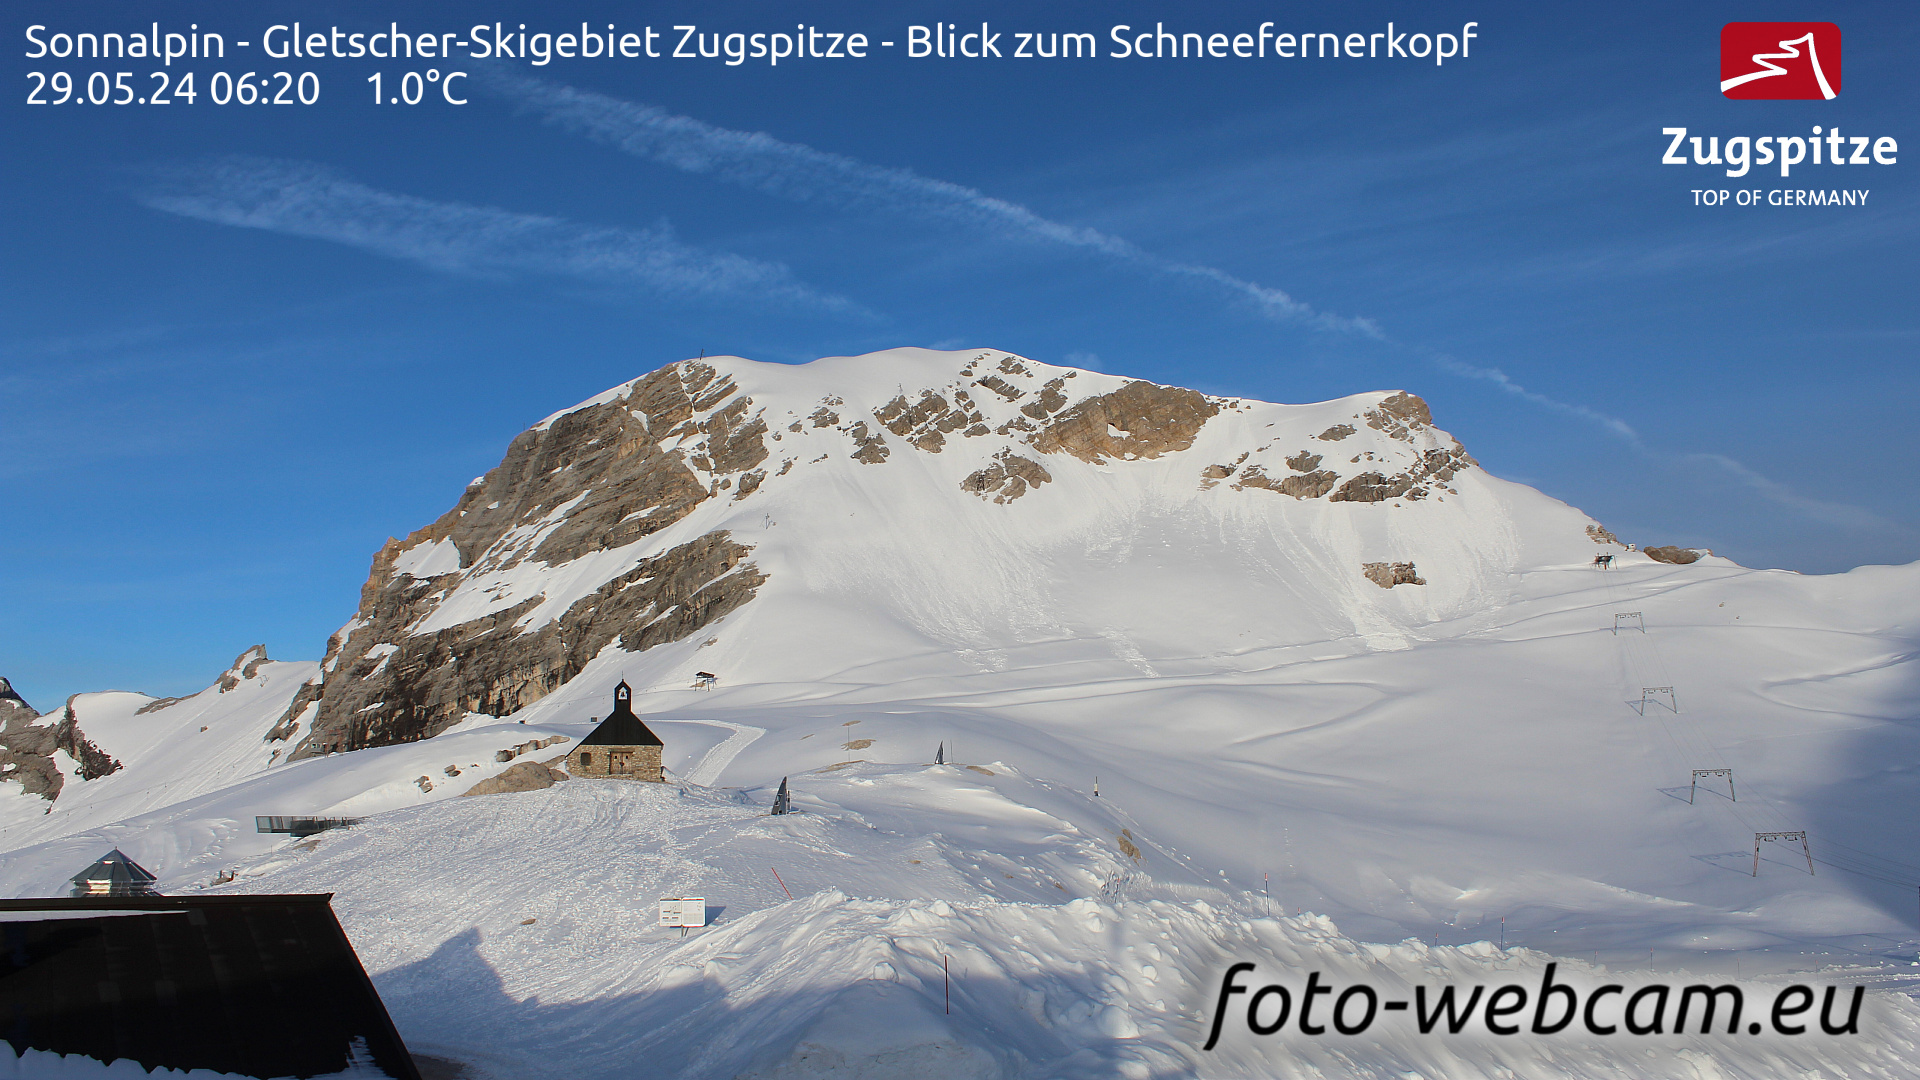 Zugspitze Mo. 06:24